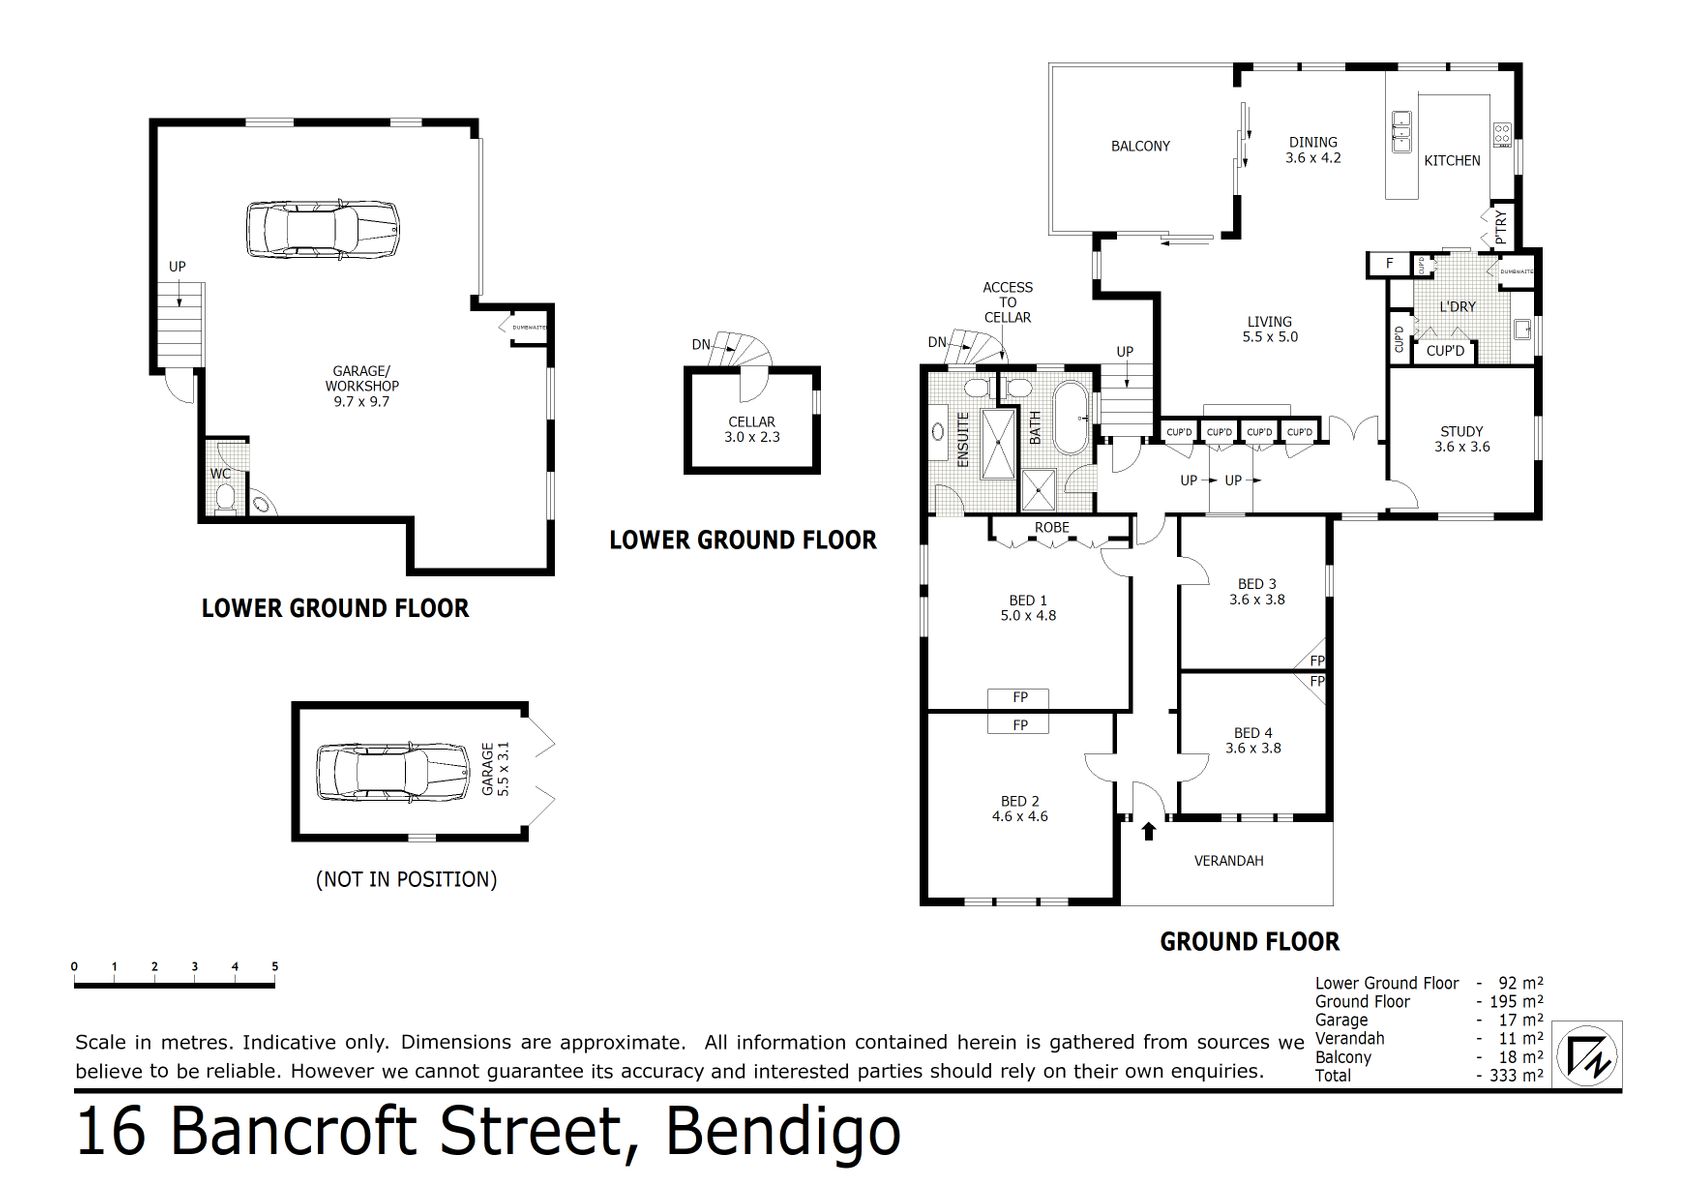 16 Bancroft Street Bendigo (08 JULY 2020) 287sqm